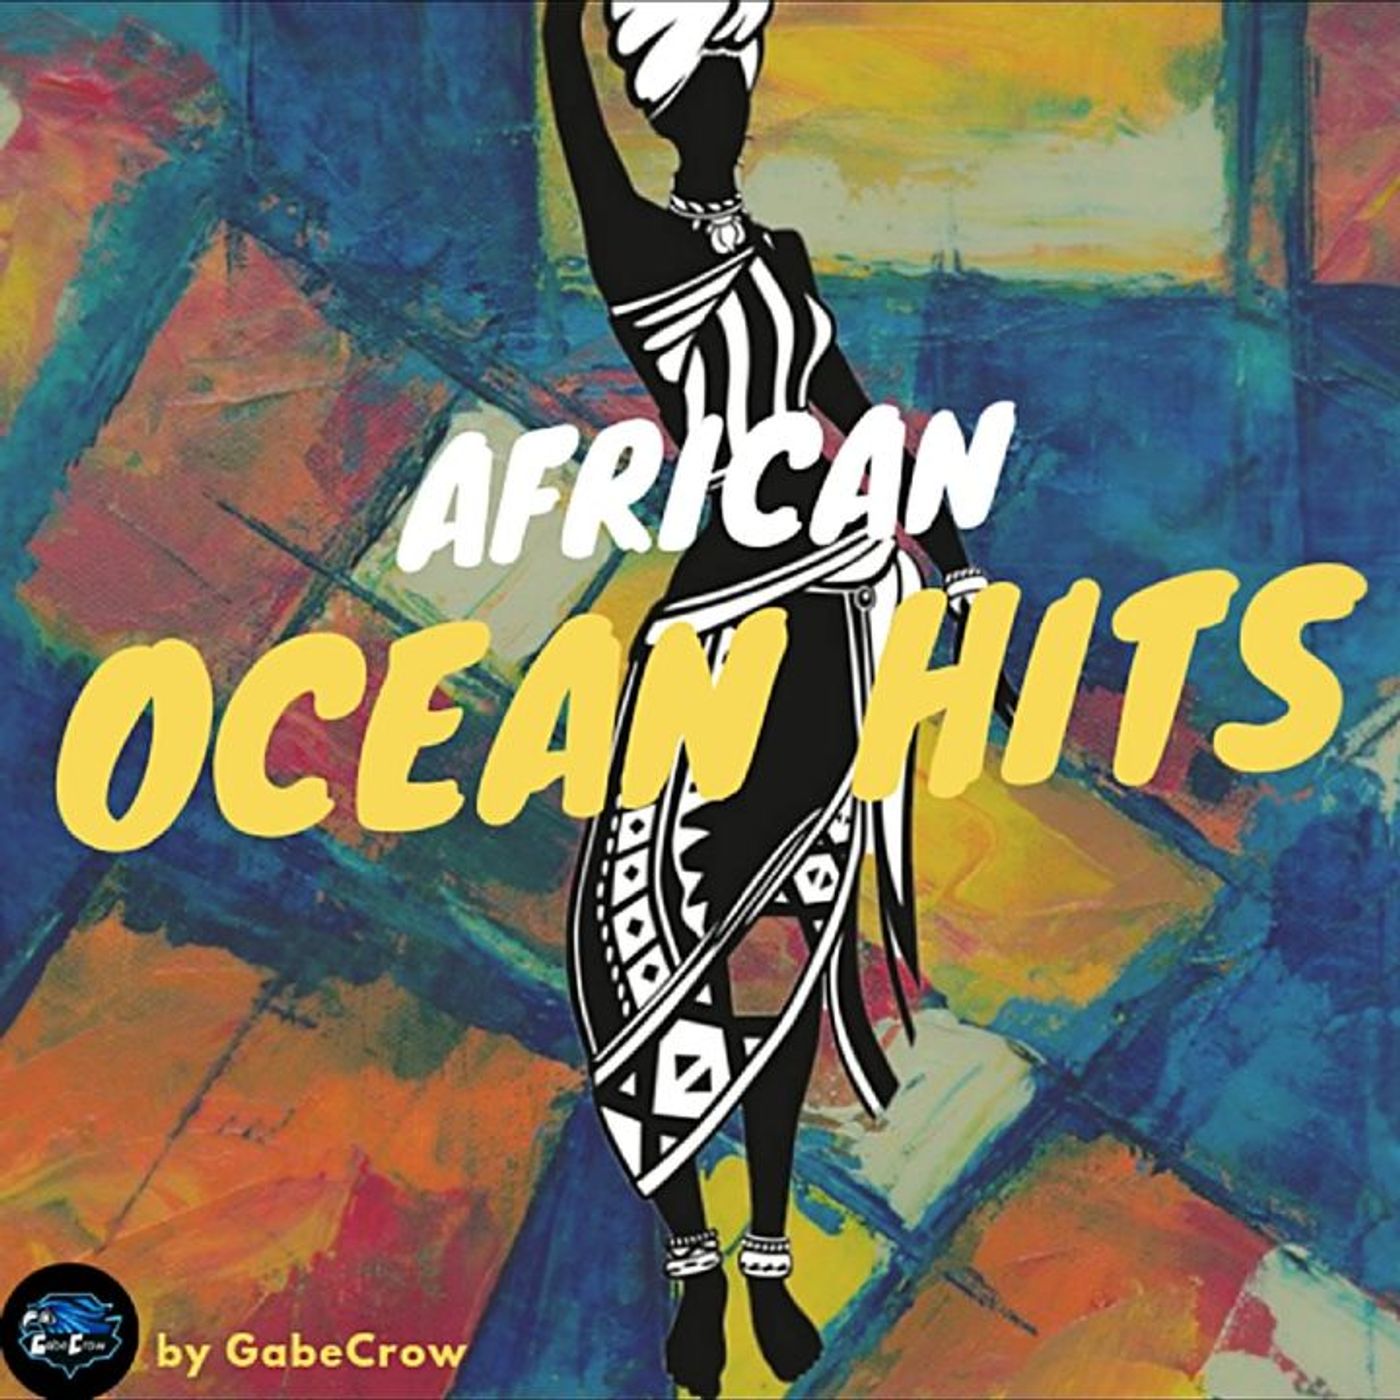 African Ocean Hits_EP#002 (PART C)